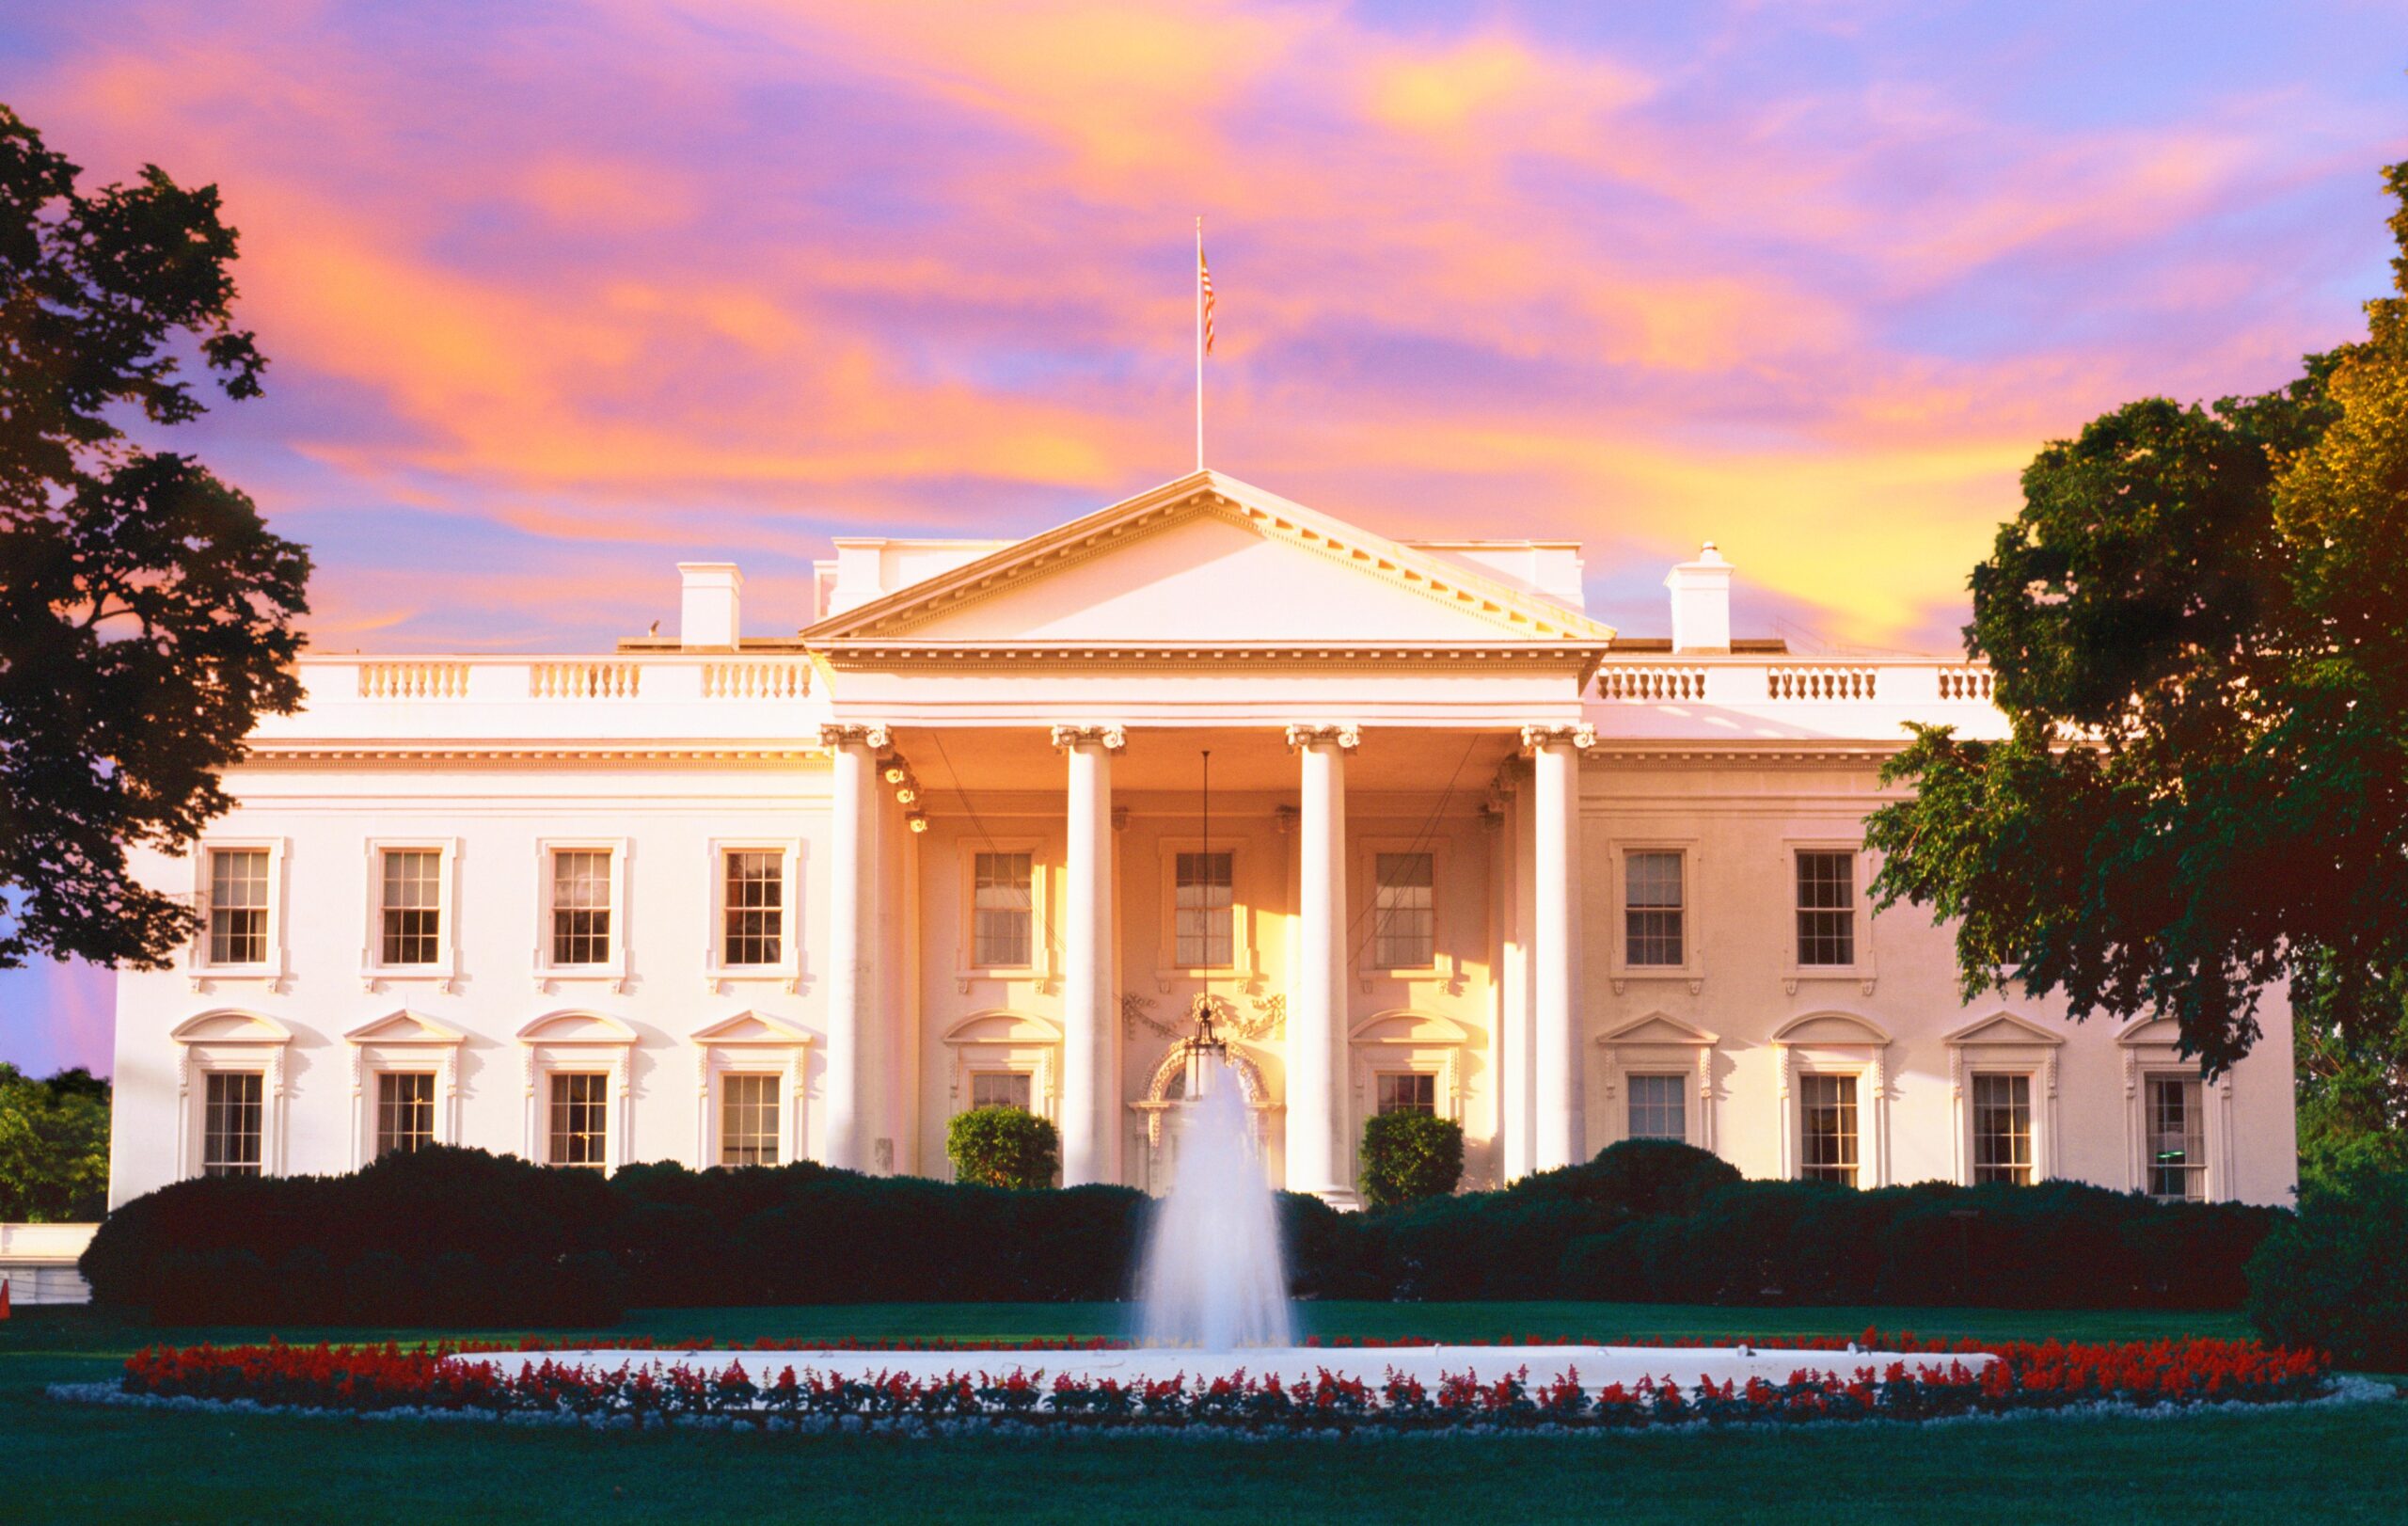 <img src="white house.jpg" alt="the white house luxury winter coach holidays"/>